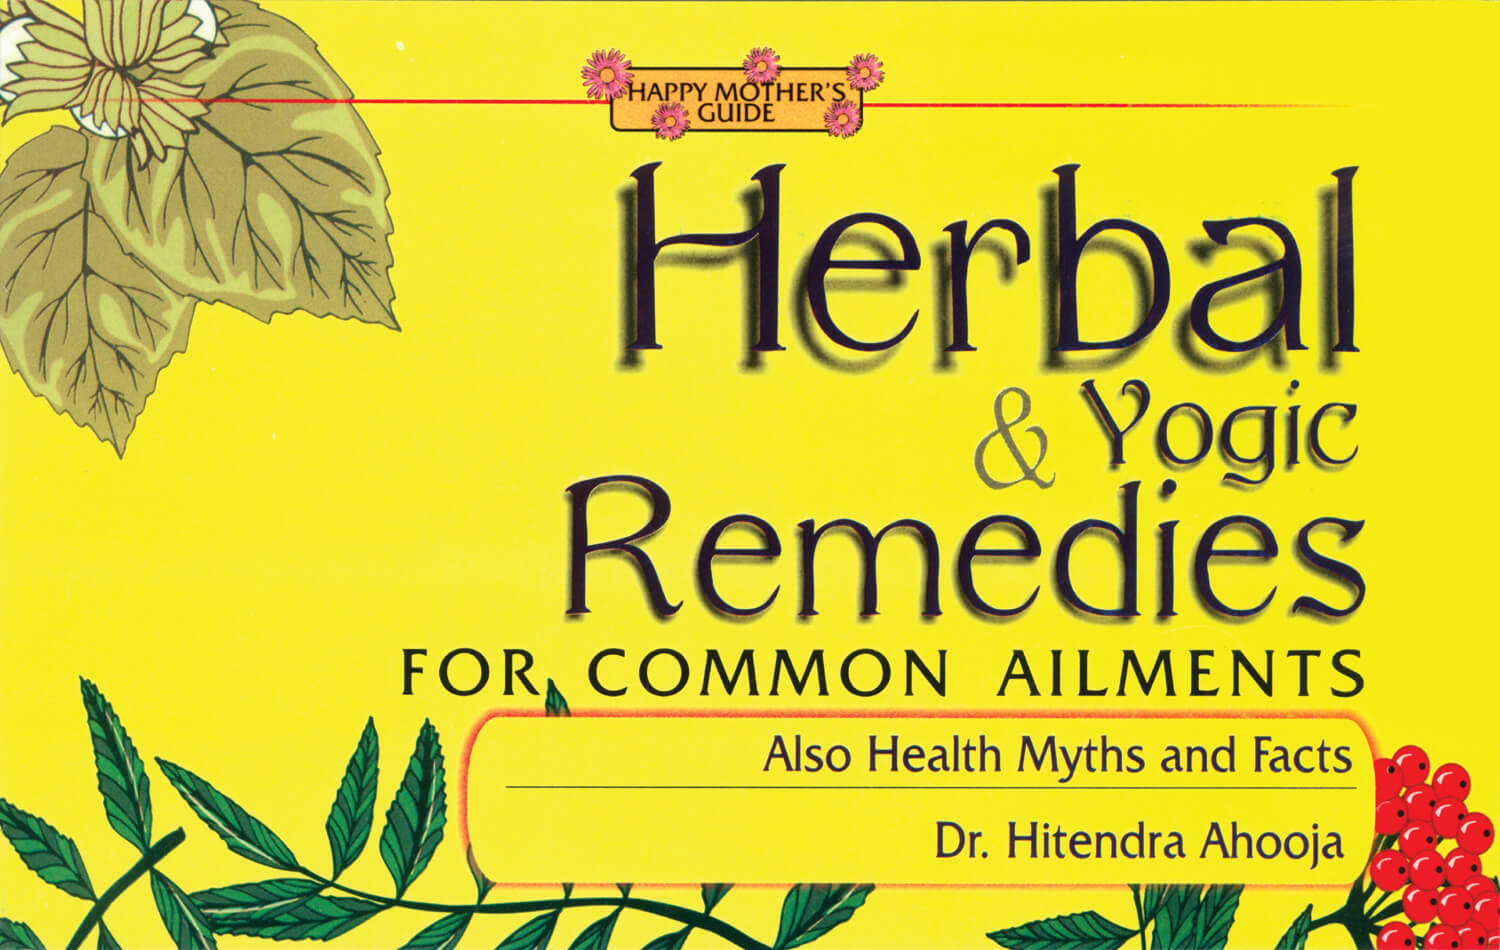 Herbal & Yogic Remedies